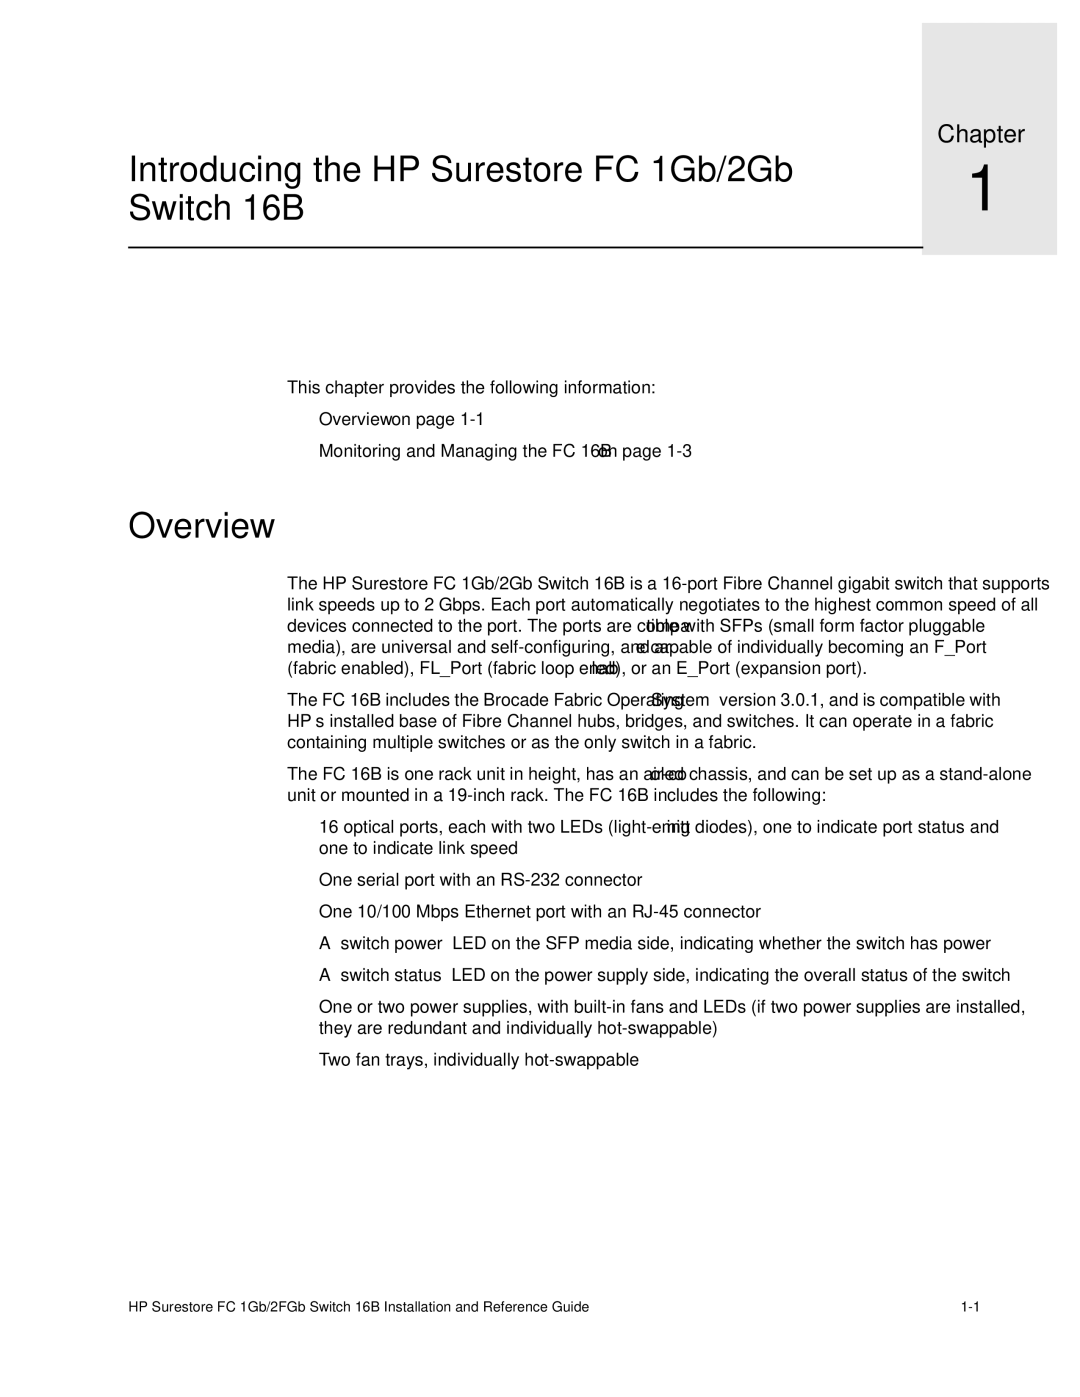 HP FC 1GB/2GB 16B manual Introducing the HP Surestore FC 1Gb/2Gb, Switch 16B, Overview 